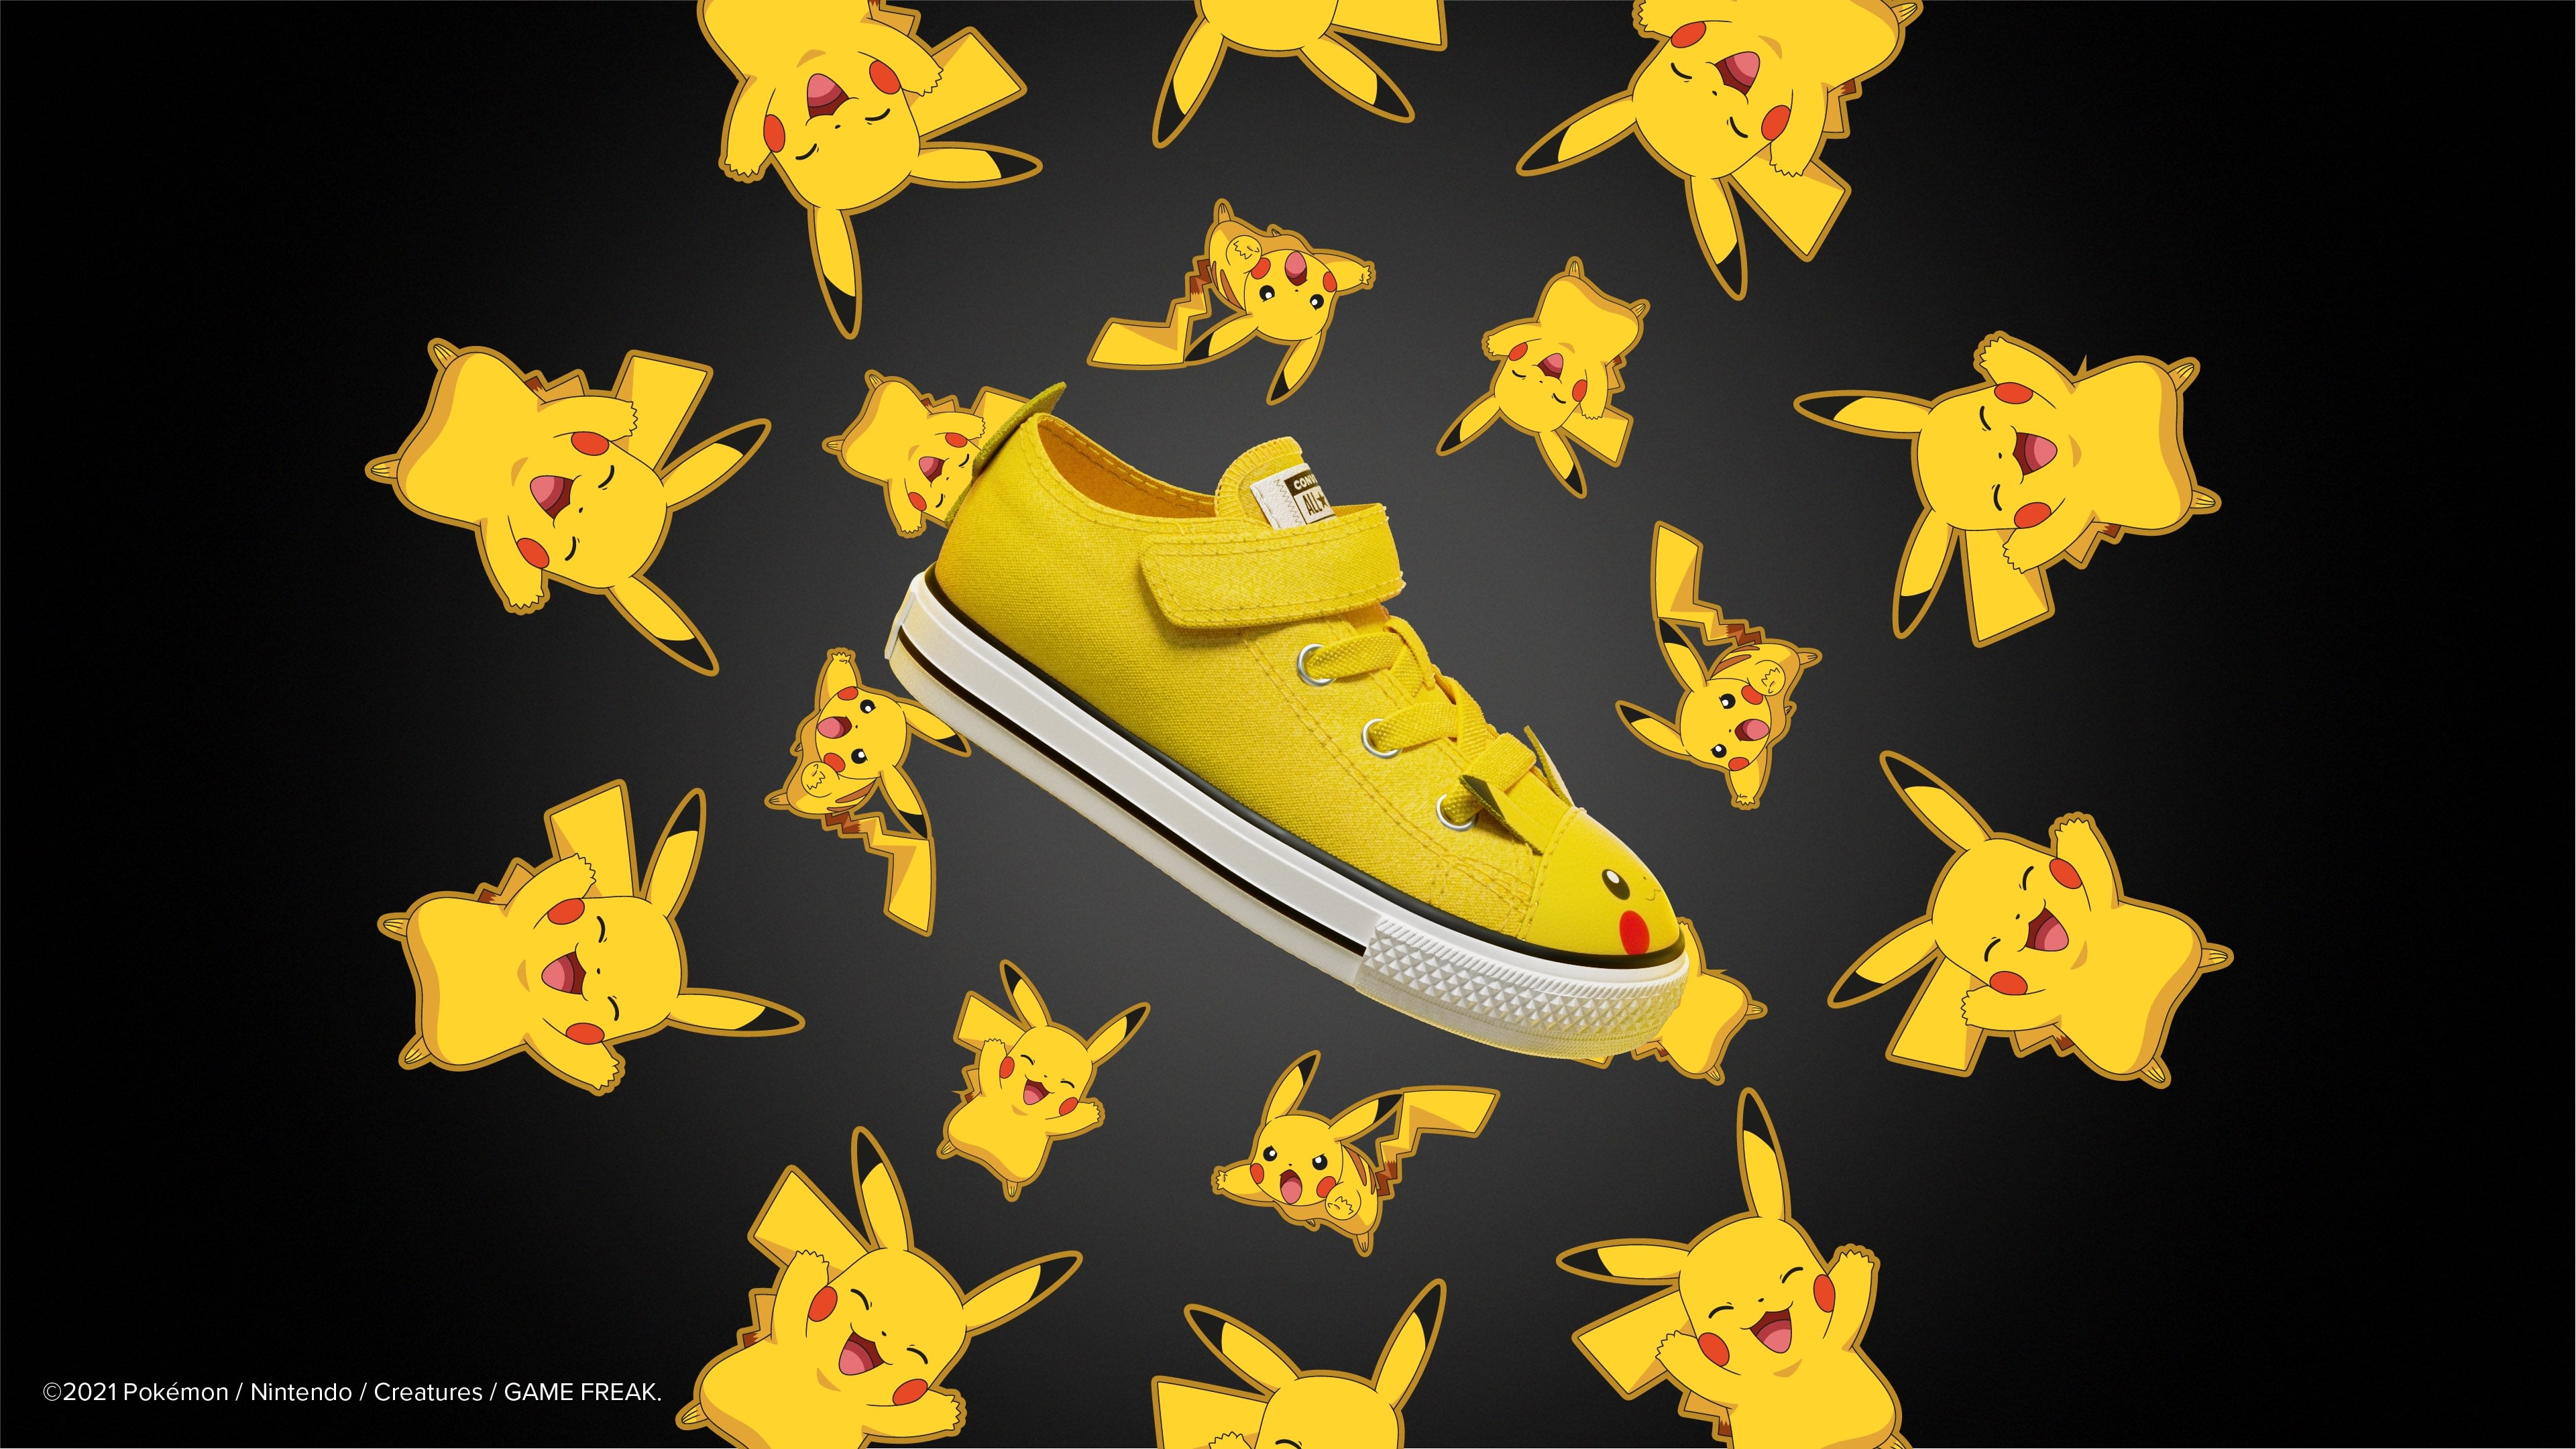 Converse, Shoes, Custom Painted Pikachu Pokmon Converse Low Tops